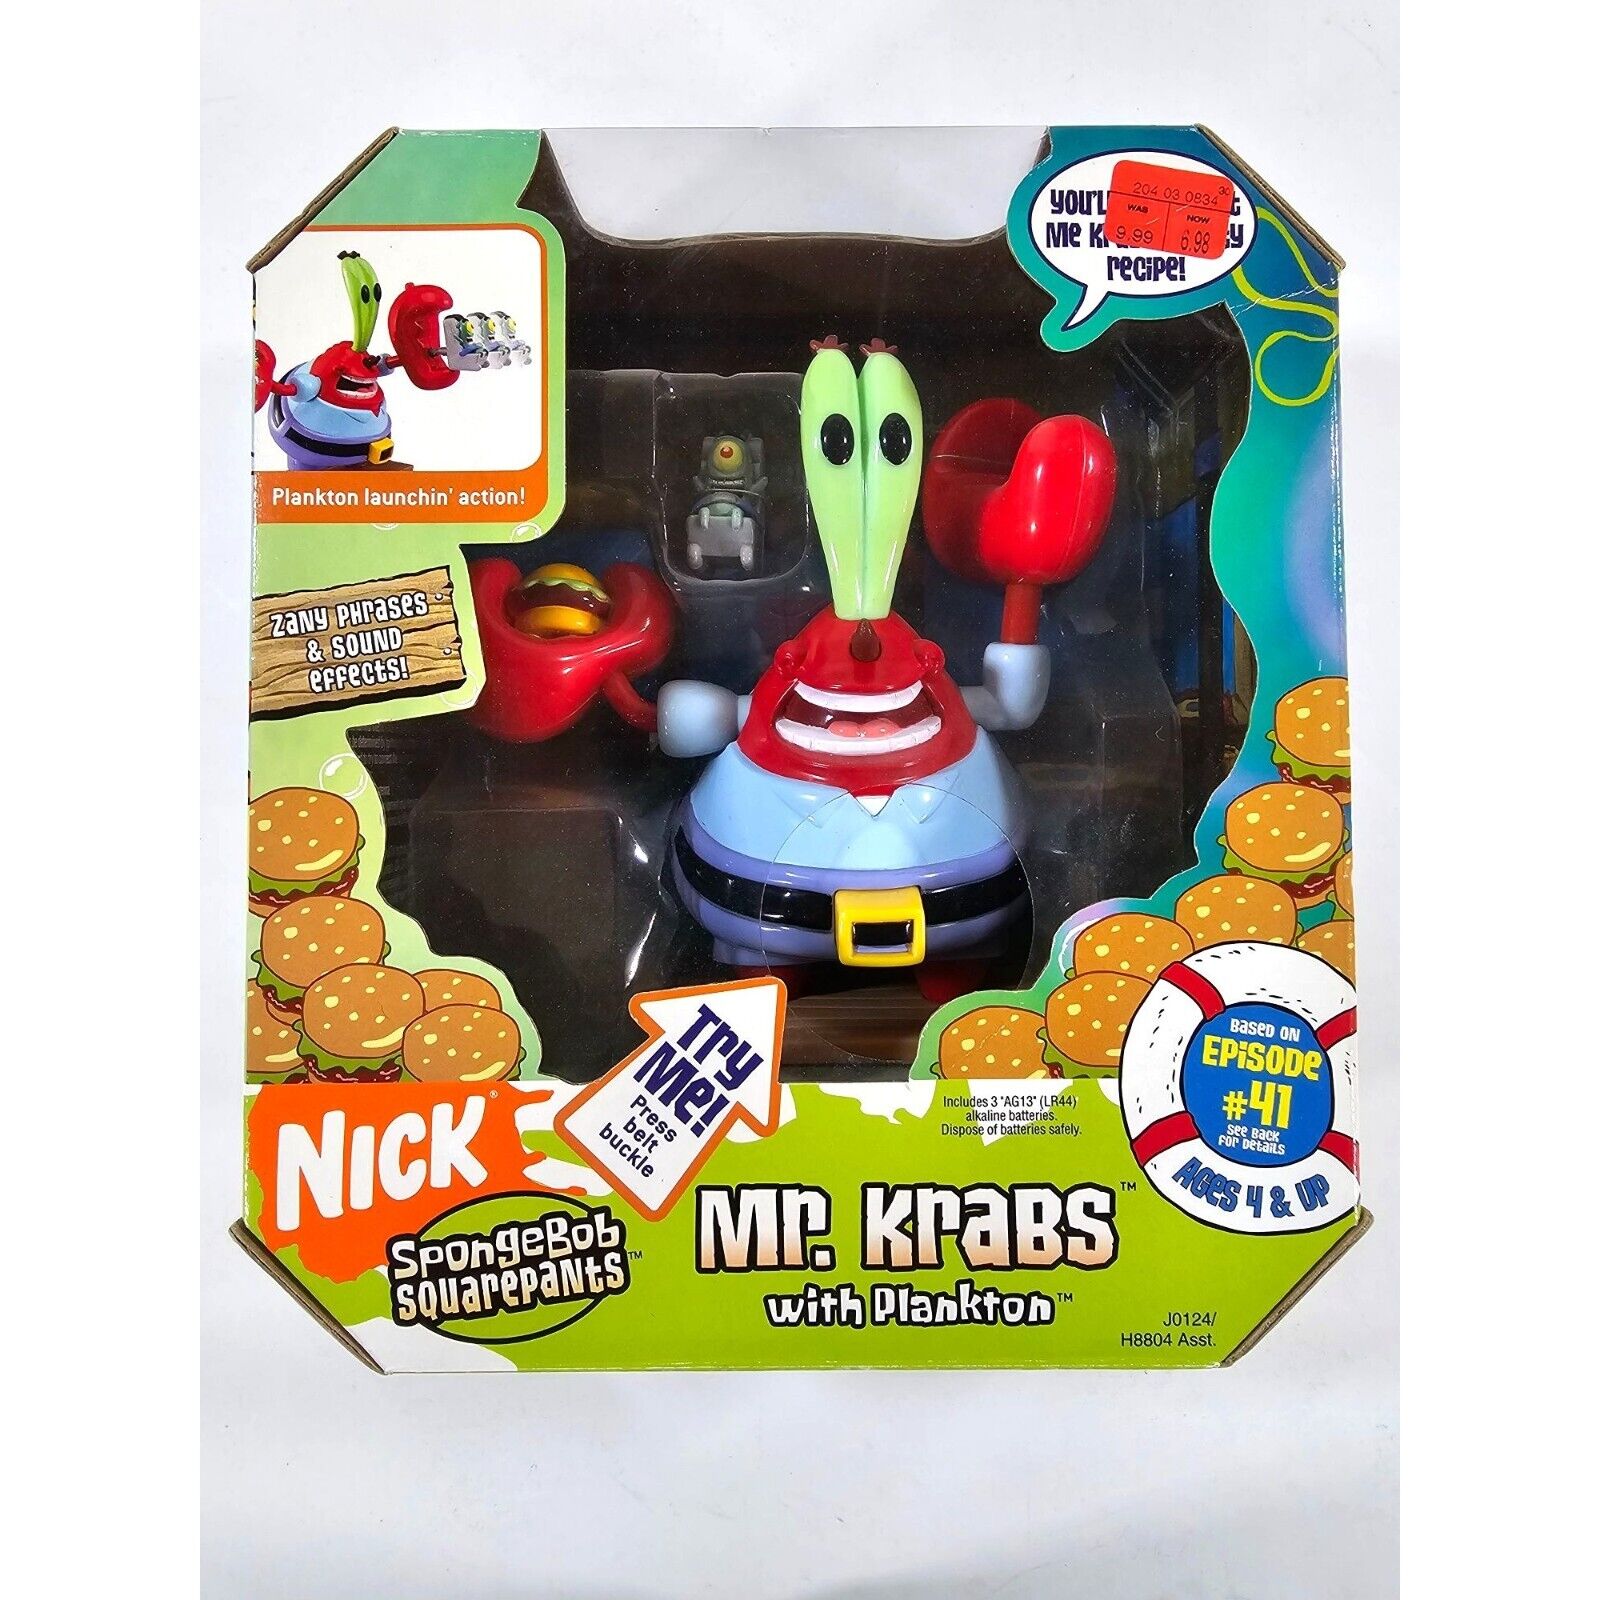 Nick Spongebob Squarepants Mr Krabs With Plankton Episode #41 NEW NIB 2005